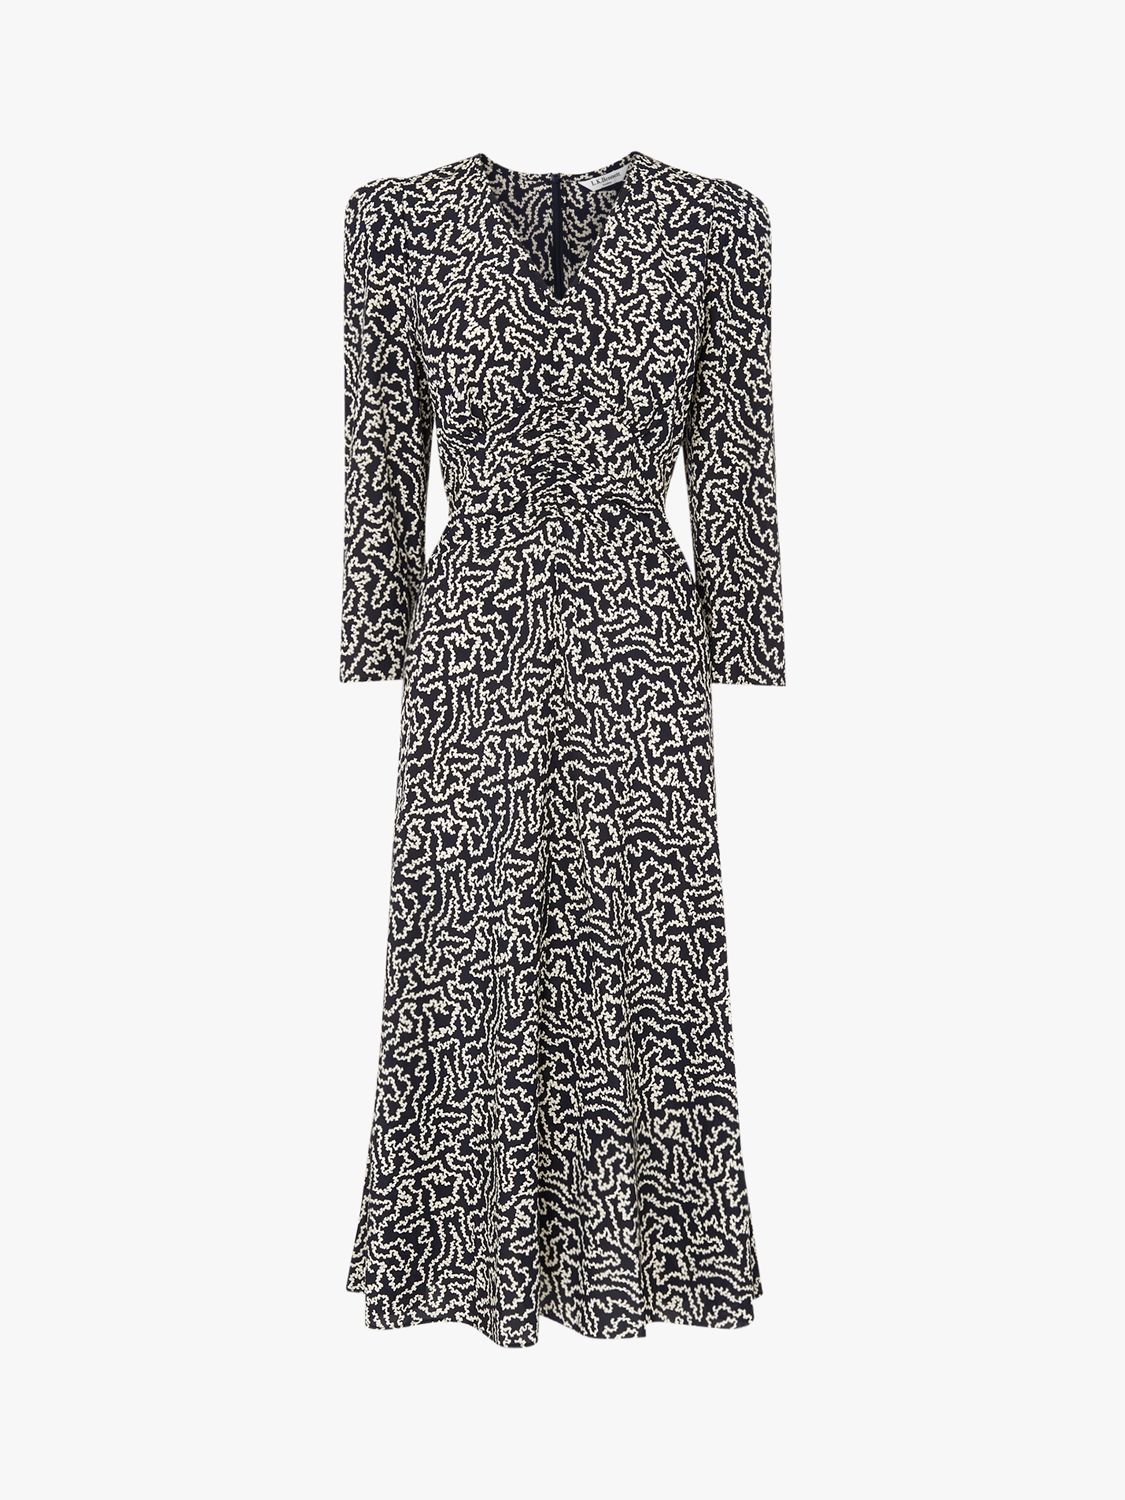 L.K.Bennett Gabrielle Abstract Midi Dress at John Lewis & Partners